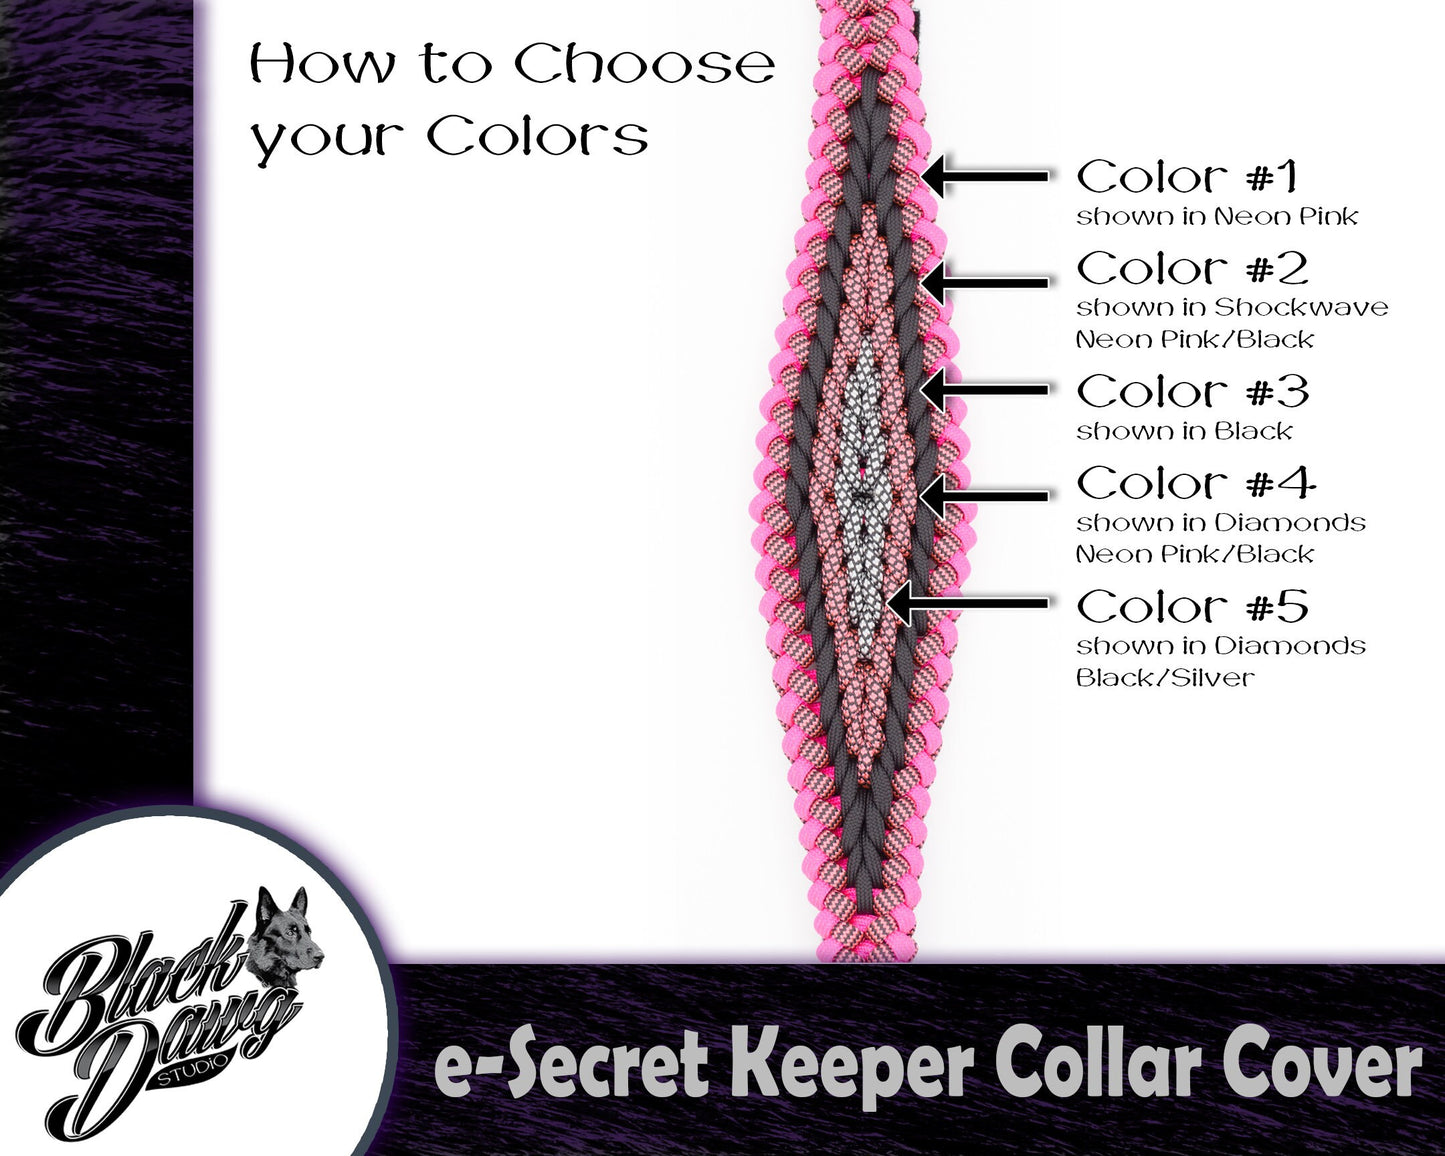 e-Secret Keeper Paracord Collar - Electric/Remote Training Collar Cover ***CUSTOM ORDER***